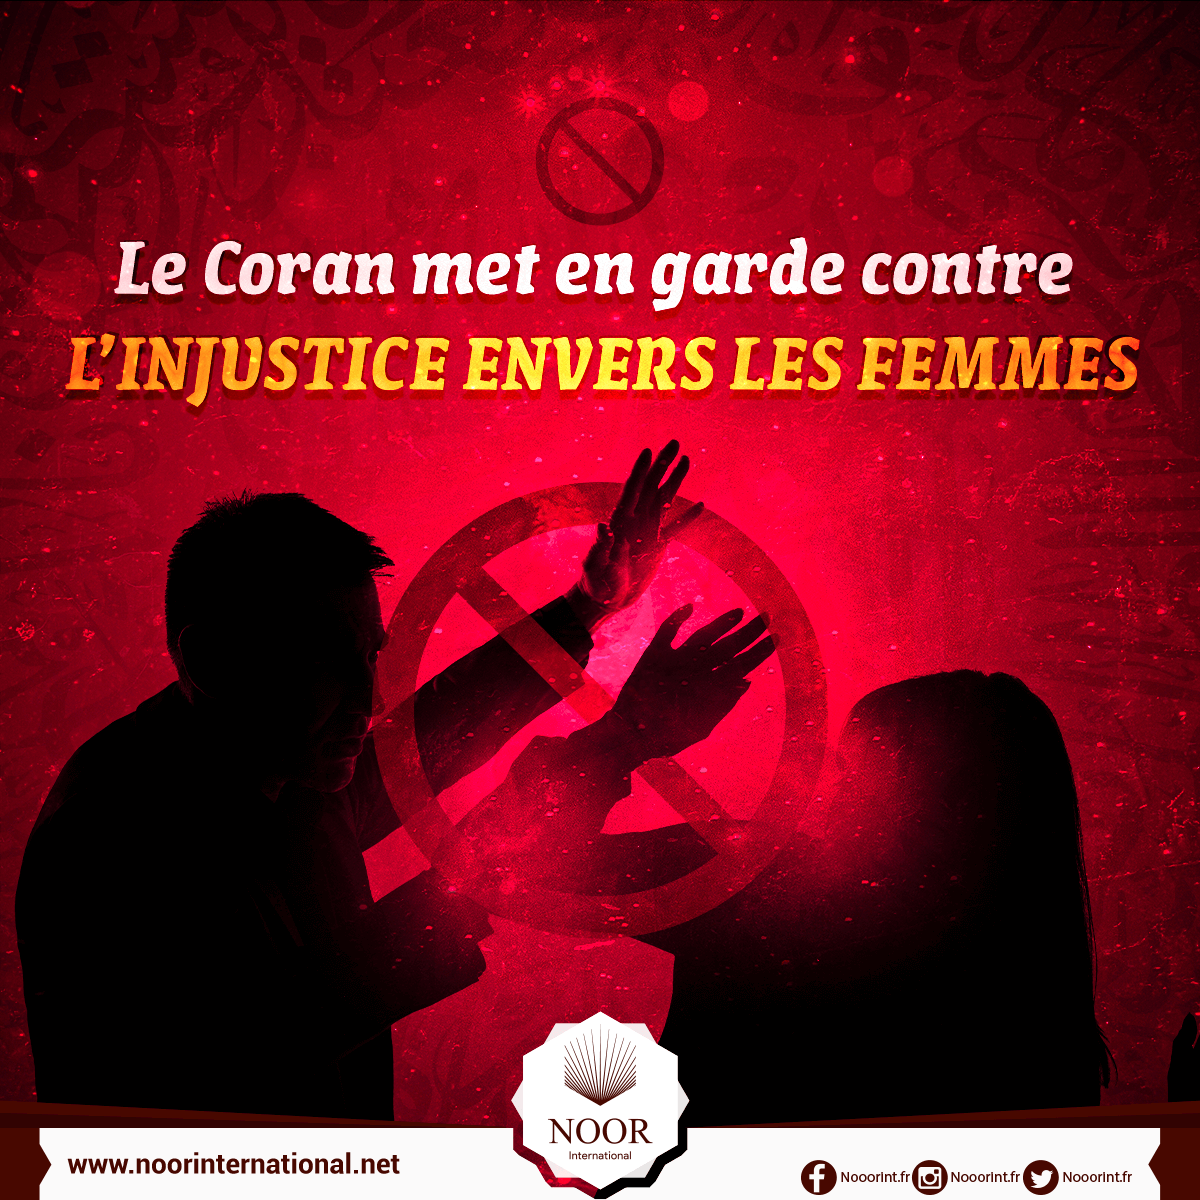 Le Coran met en garde contre l’injustice envers les femmes